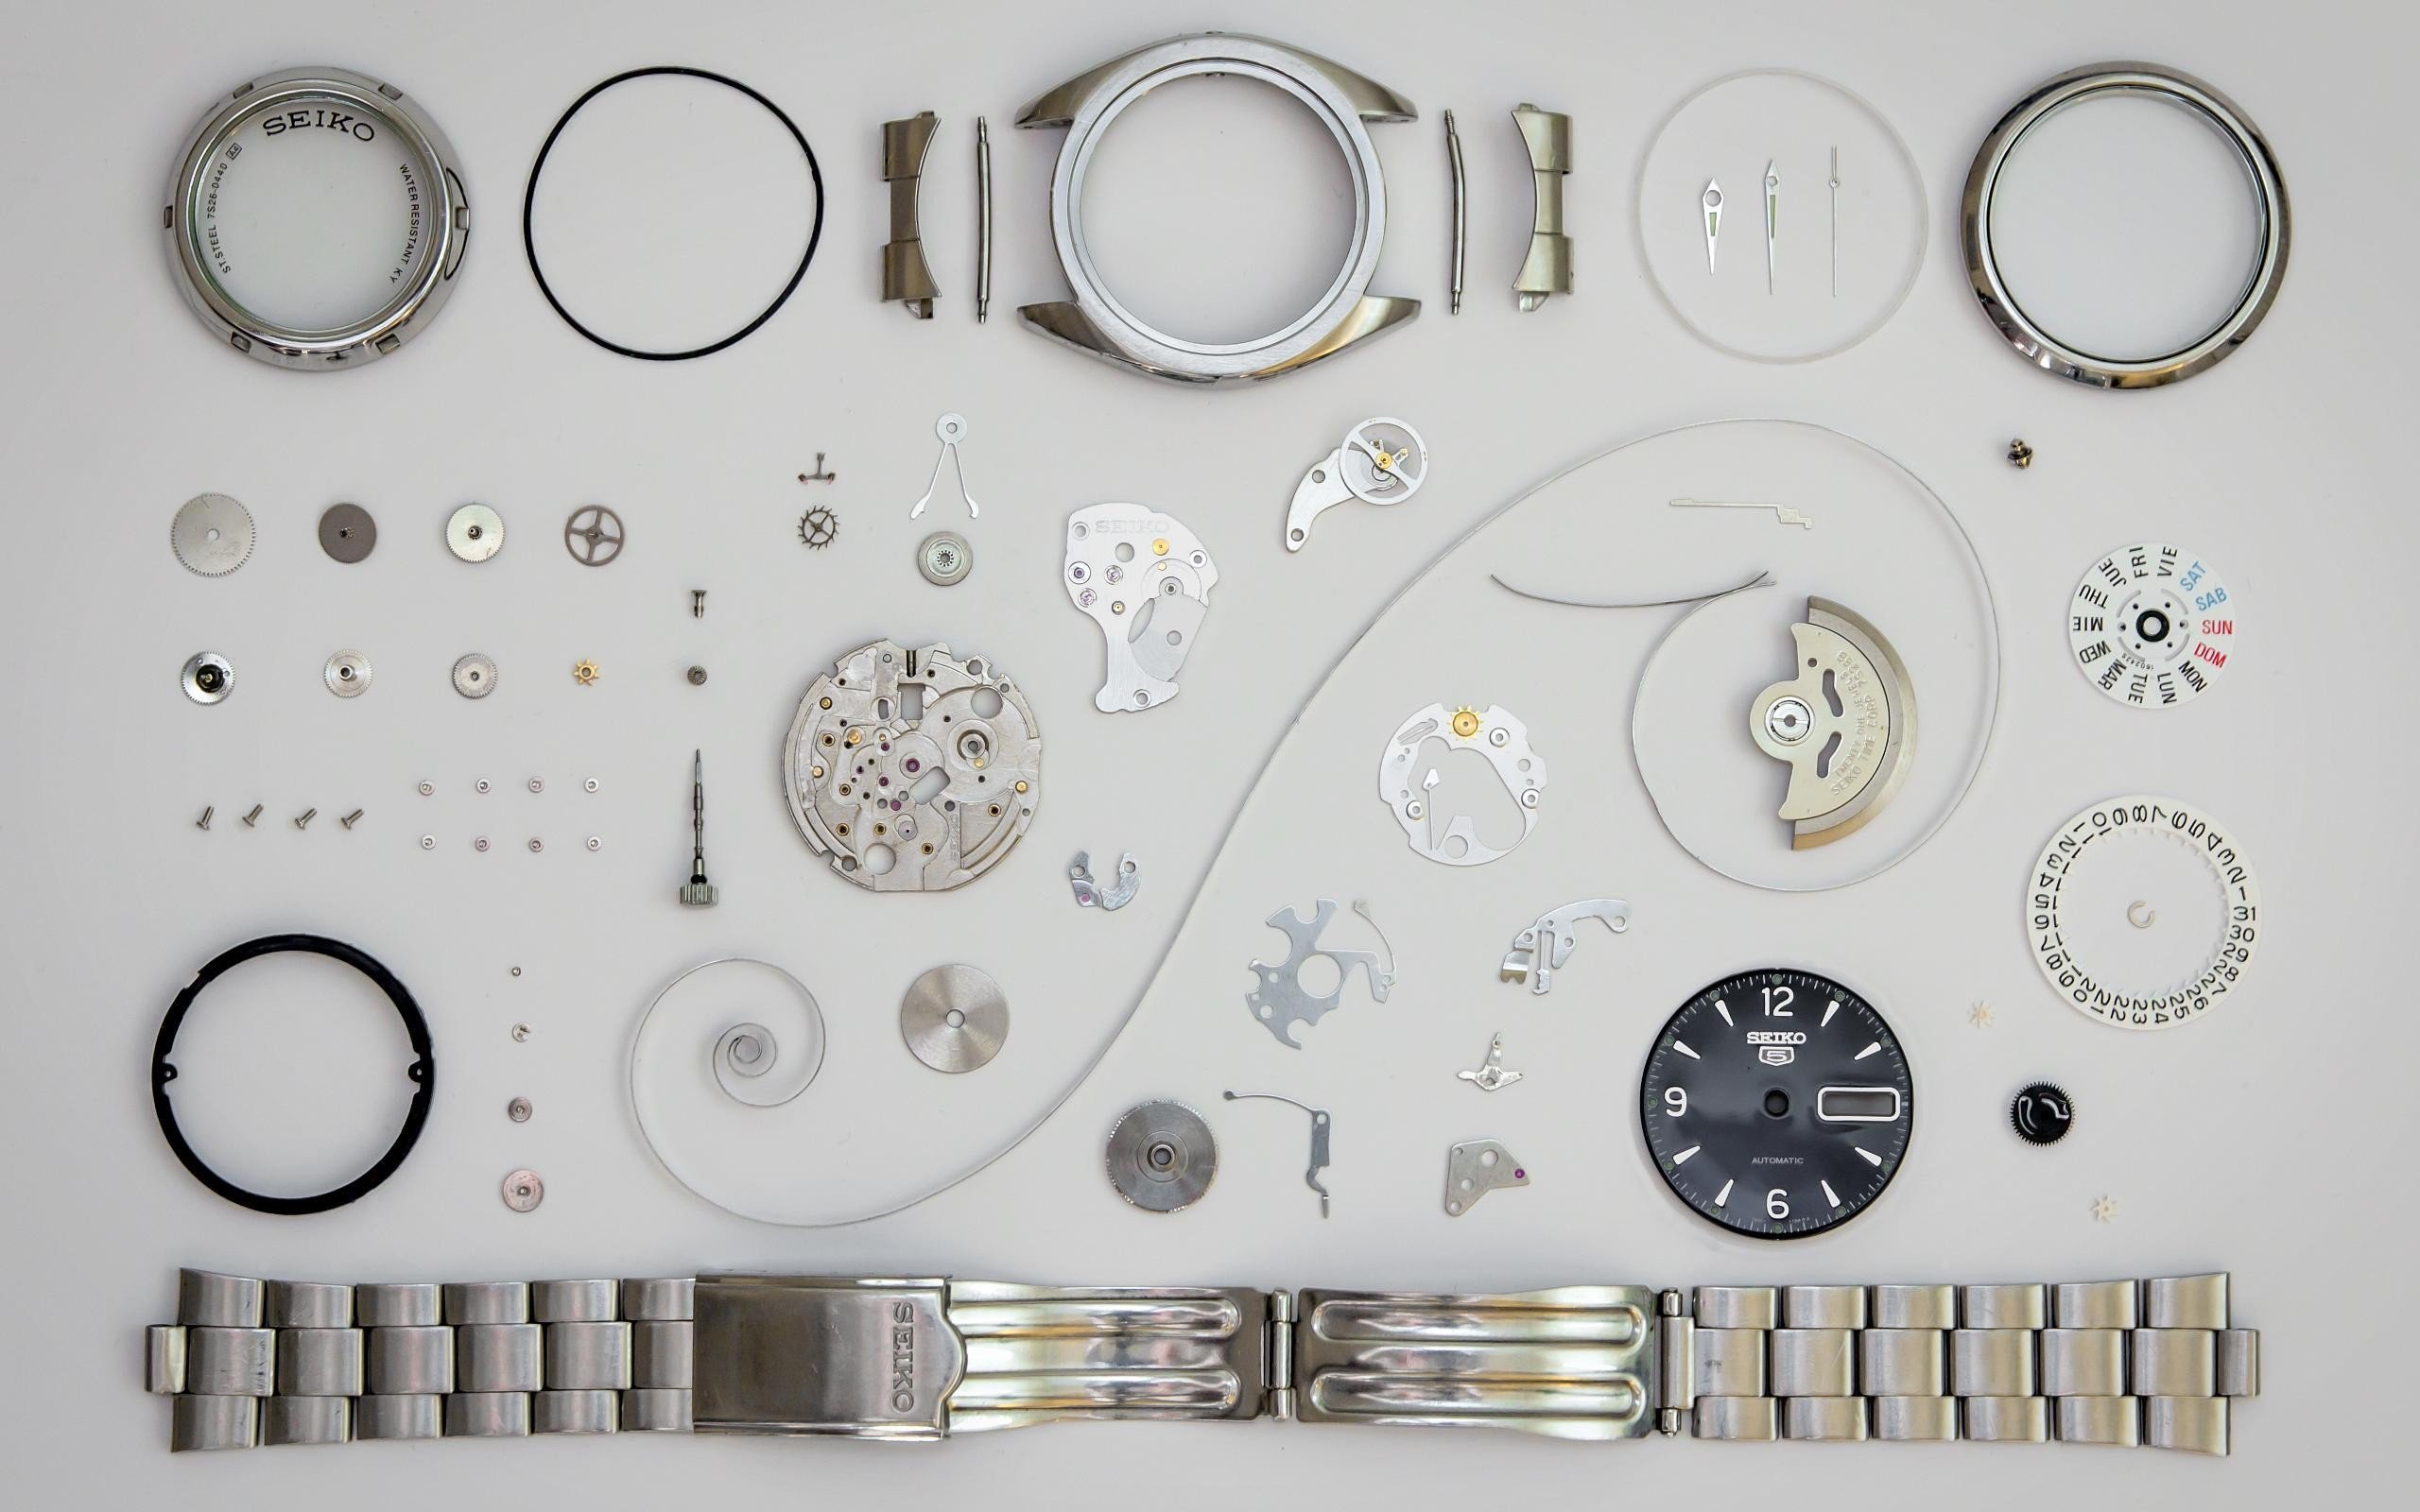 watch, Luxury watches, Seiko, Dials, Clockwork, Clockworks, Gears, Screw, Spring, Bracelets, Metal, Elements, Numbers Wallpaper